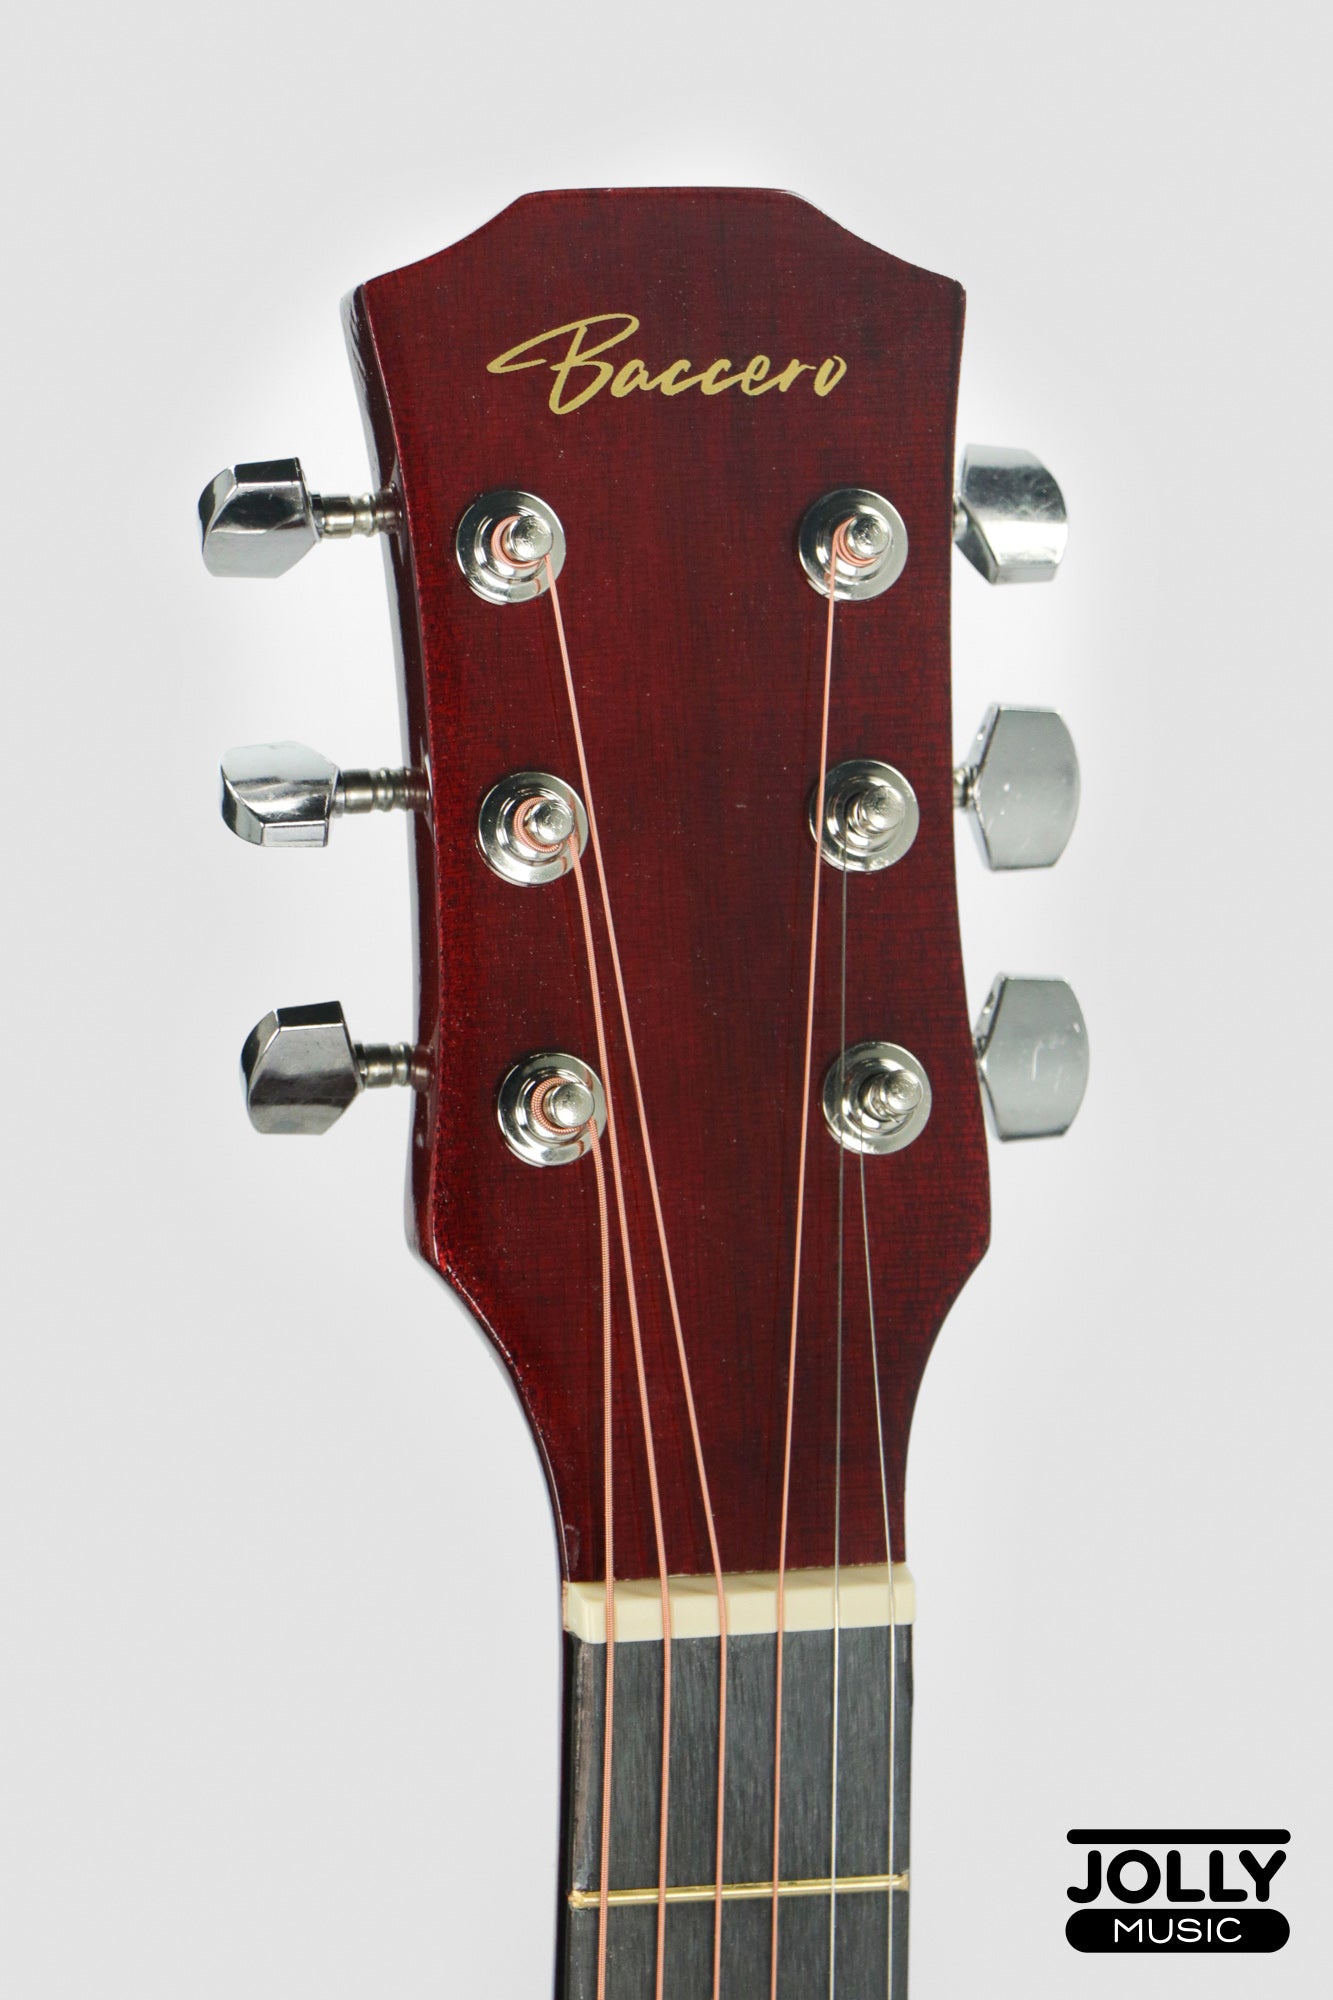 Baccero 38" Guitar K-38LT Truss Rod w/ Case, 3 Picks, Tuner, Capo - Natural